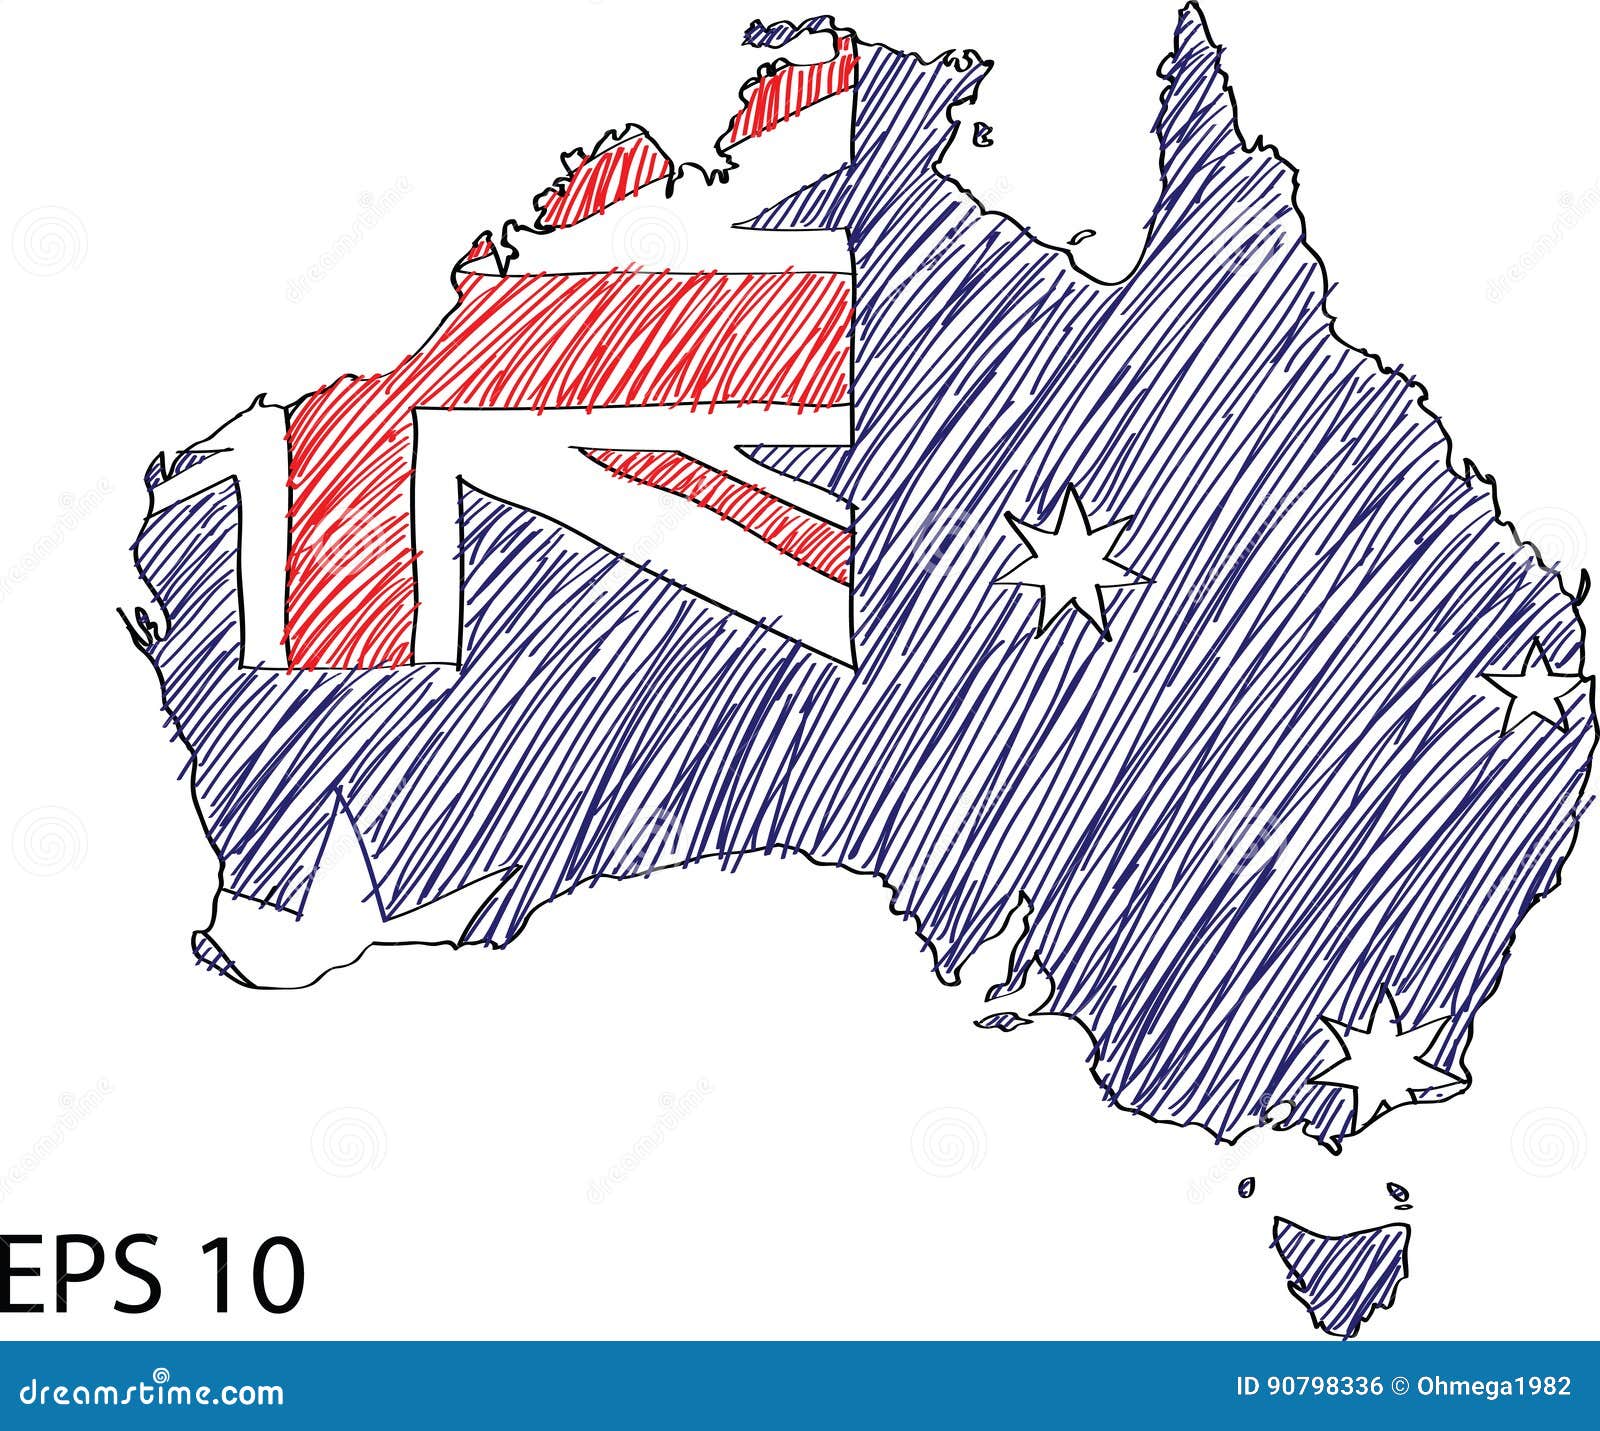 Australia Flag Map Sketch Up Stock Vector Illustration of canberra: 90798336